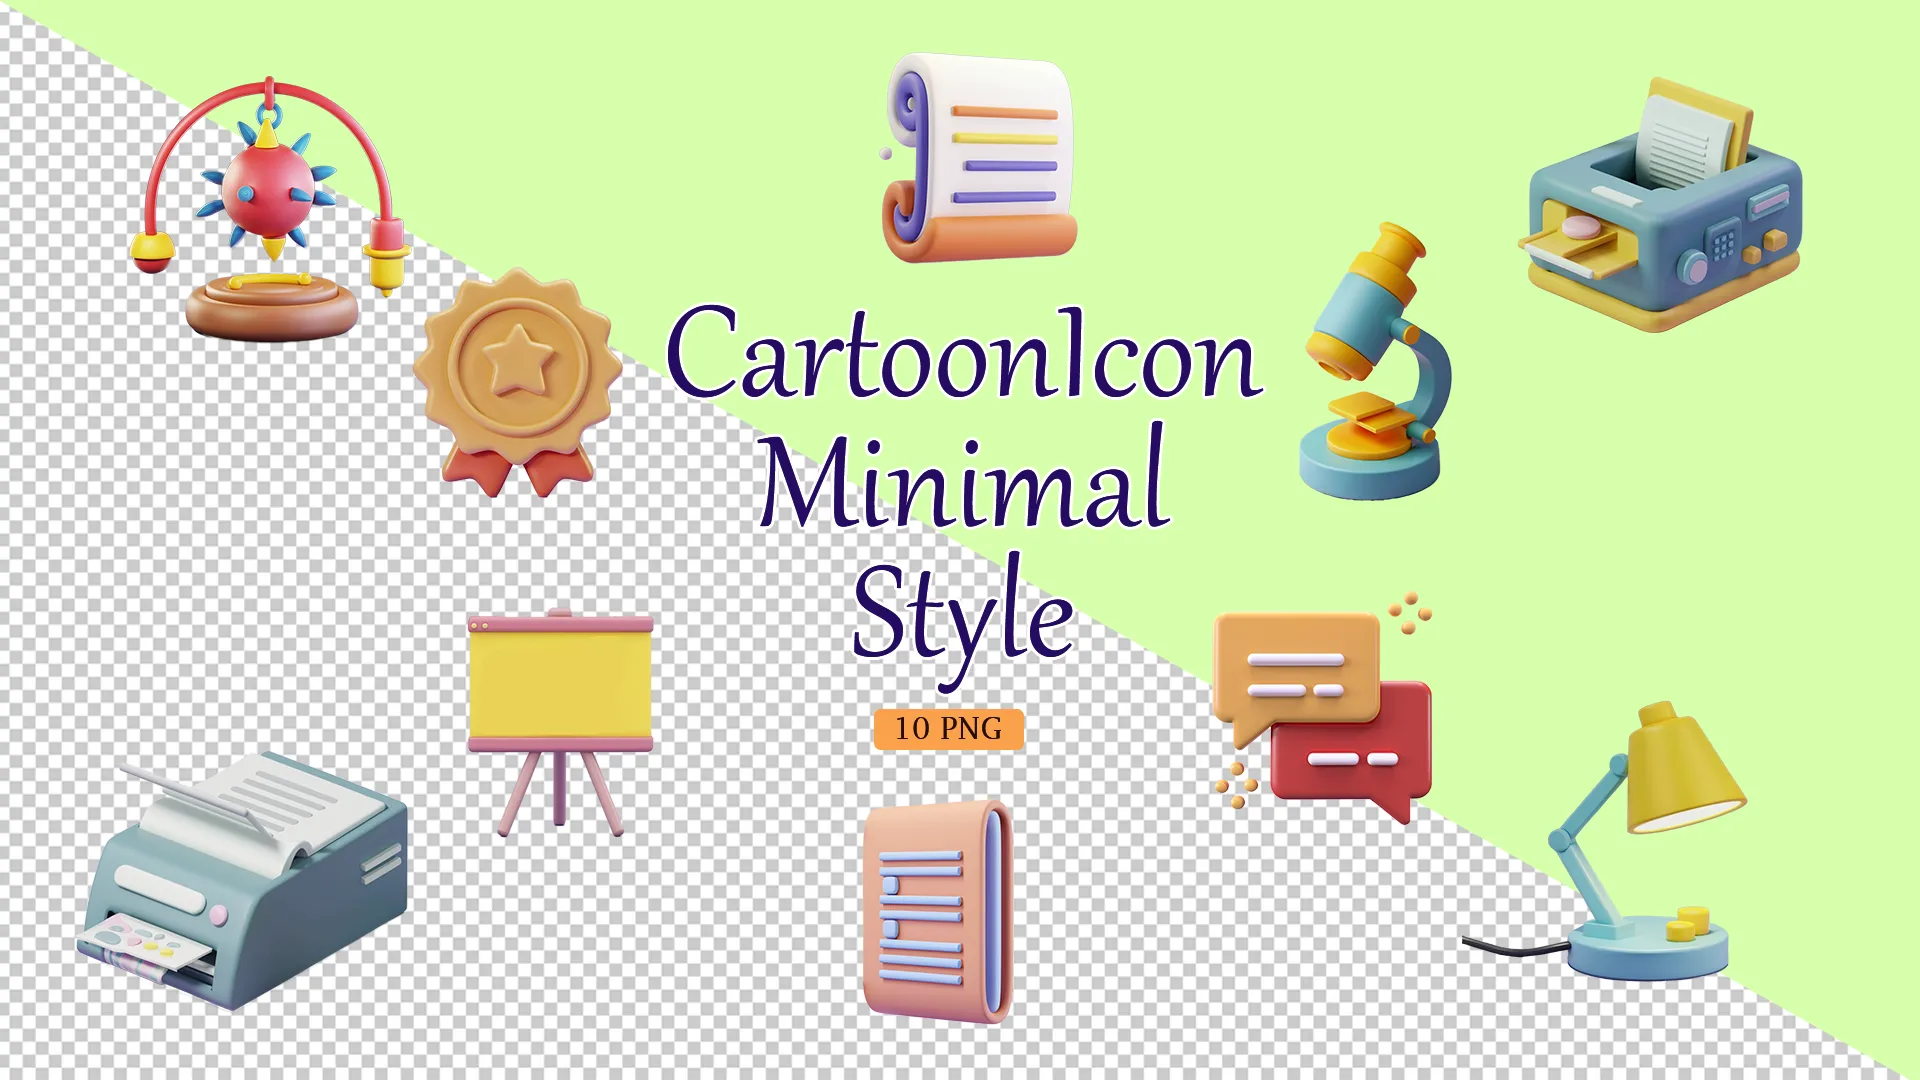 Charming 3D Cartoon Icon Set in Minimalist Style